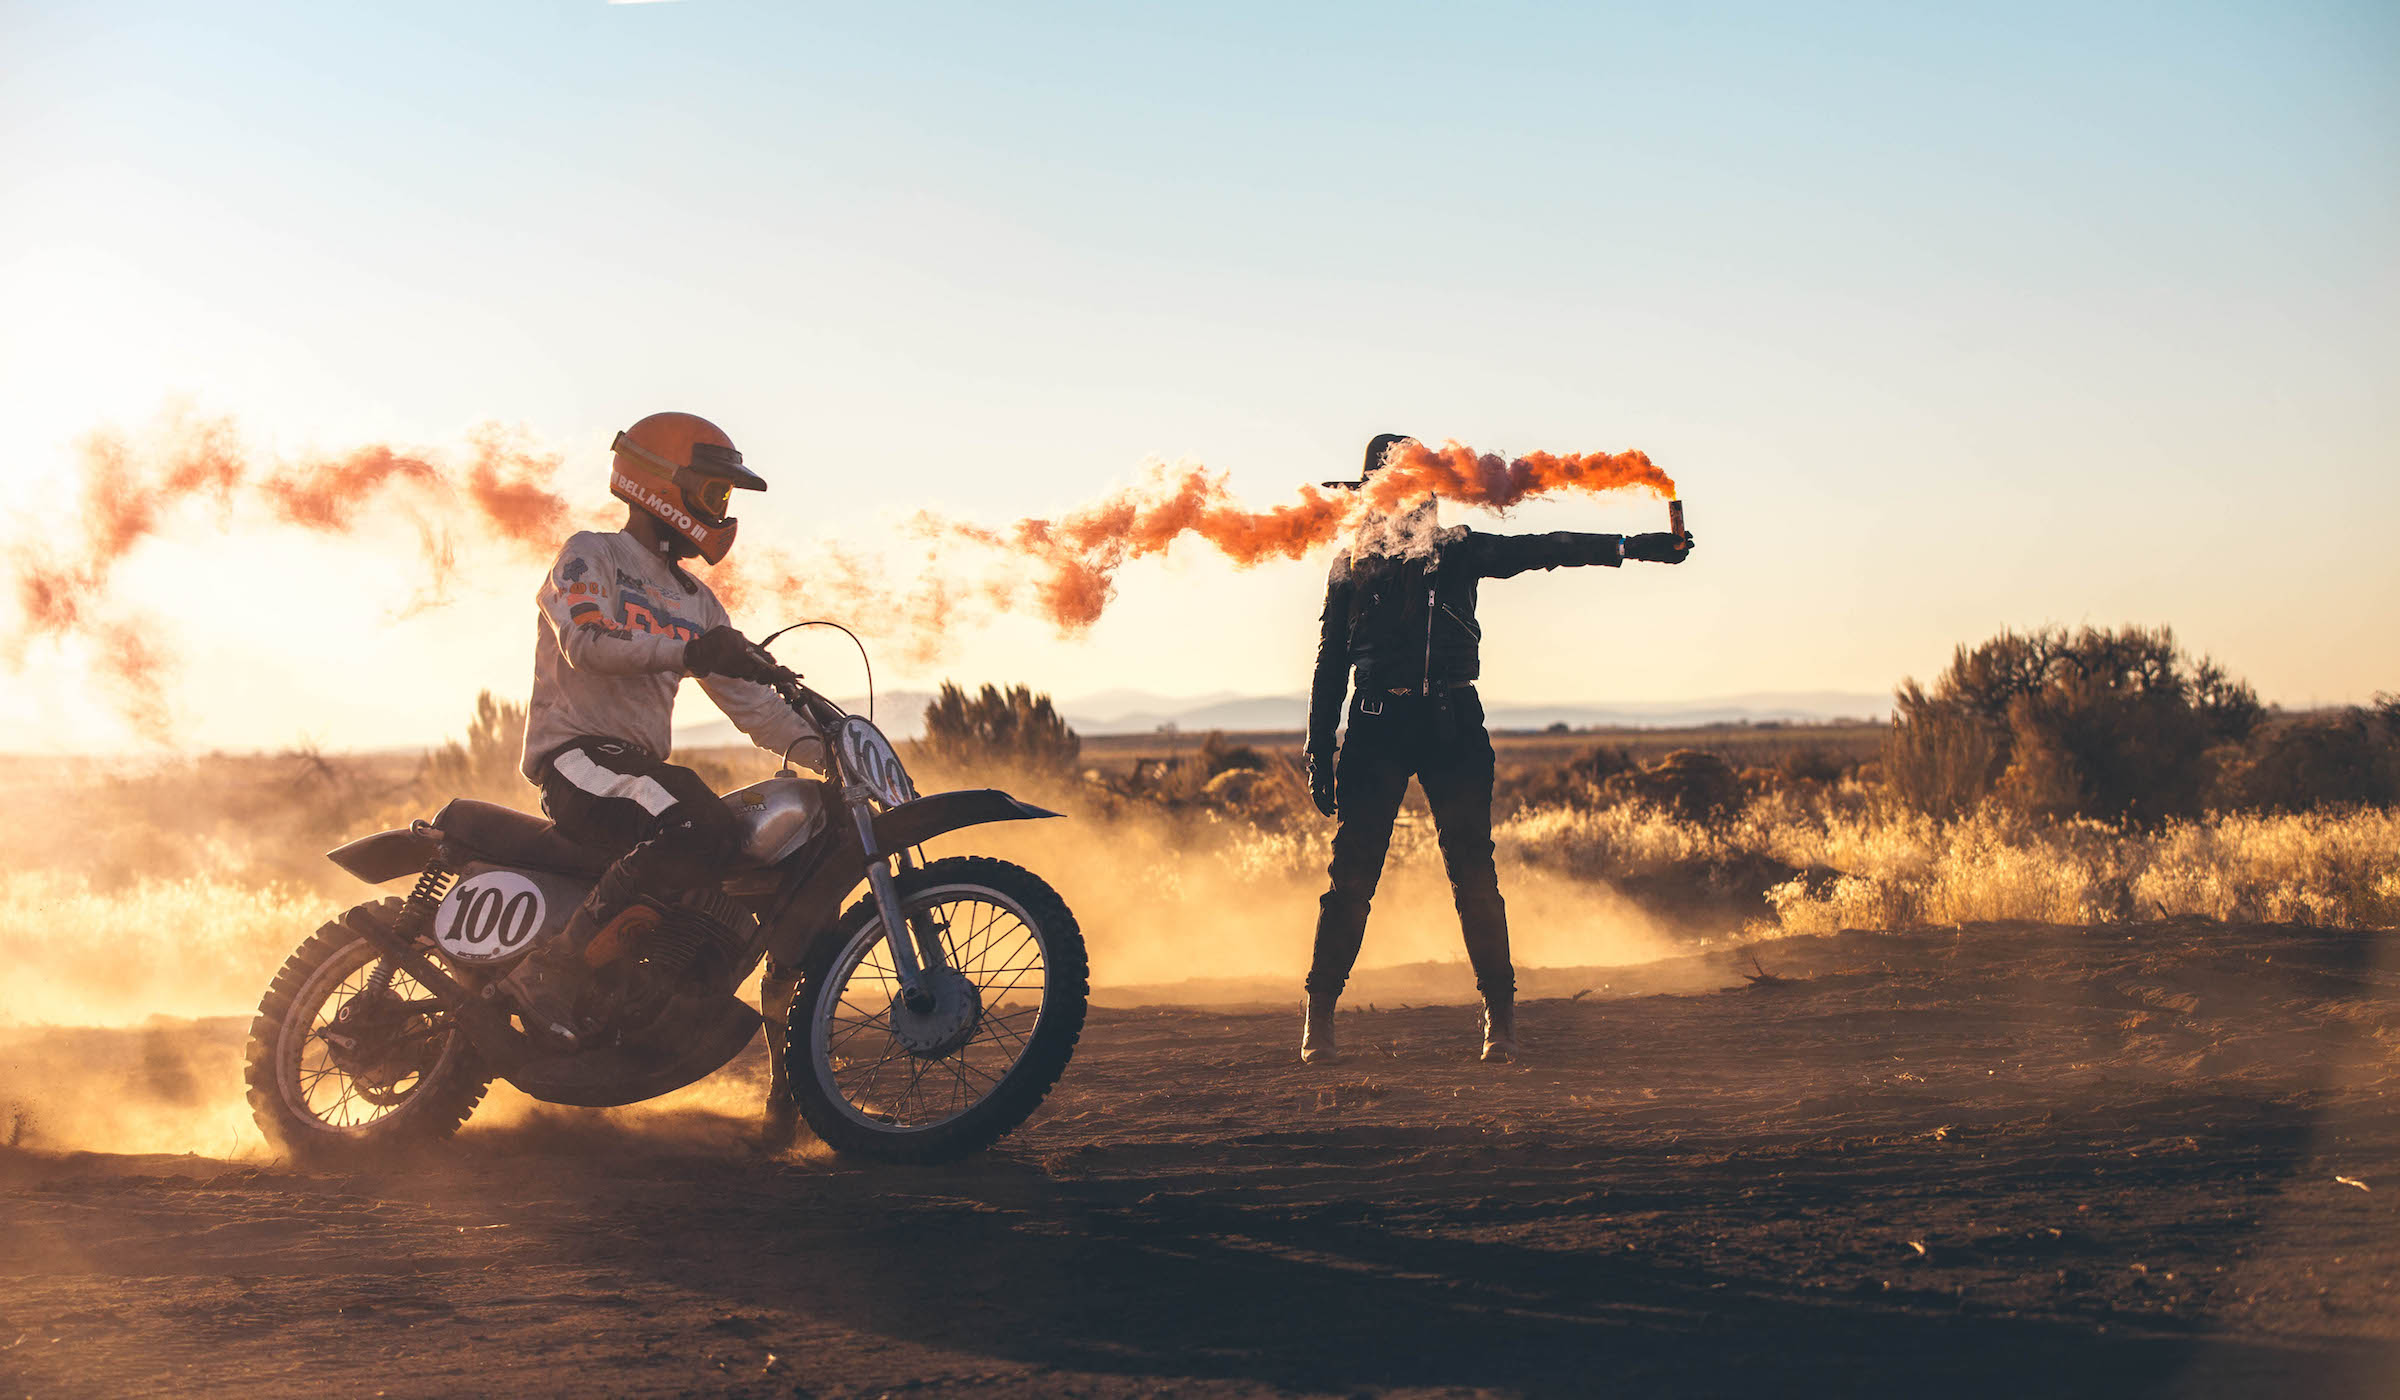 Desert Race Motorcycle